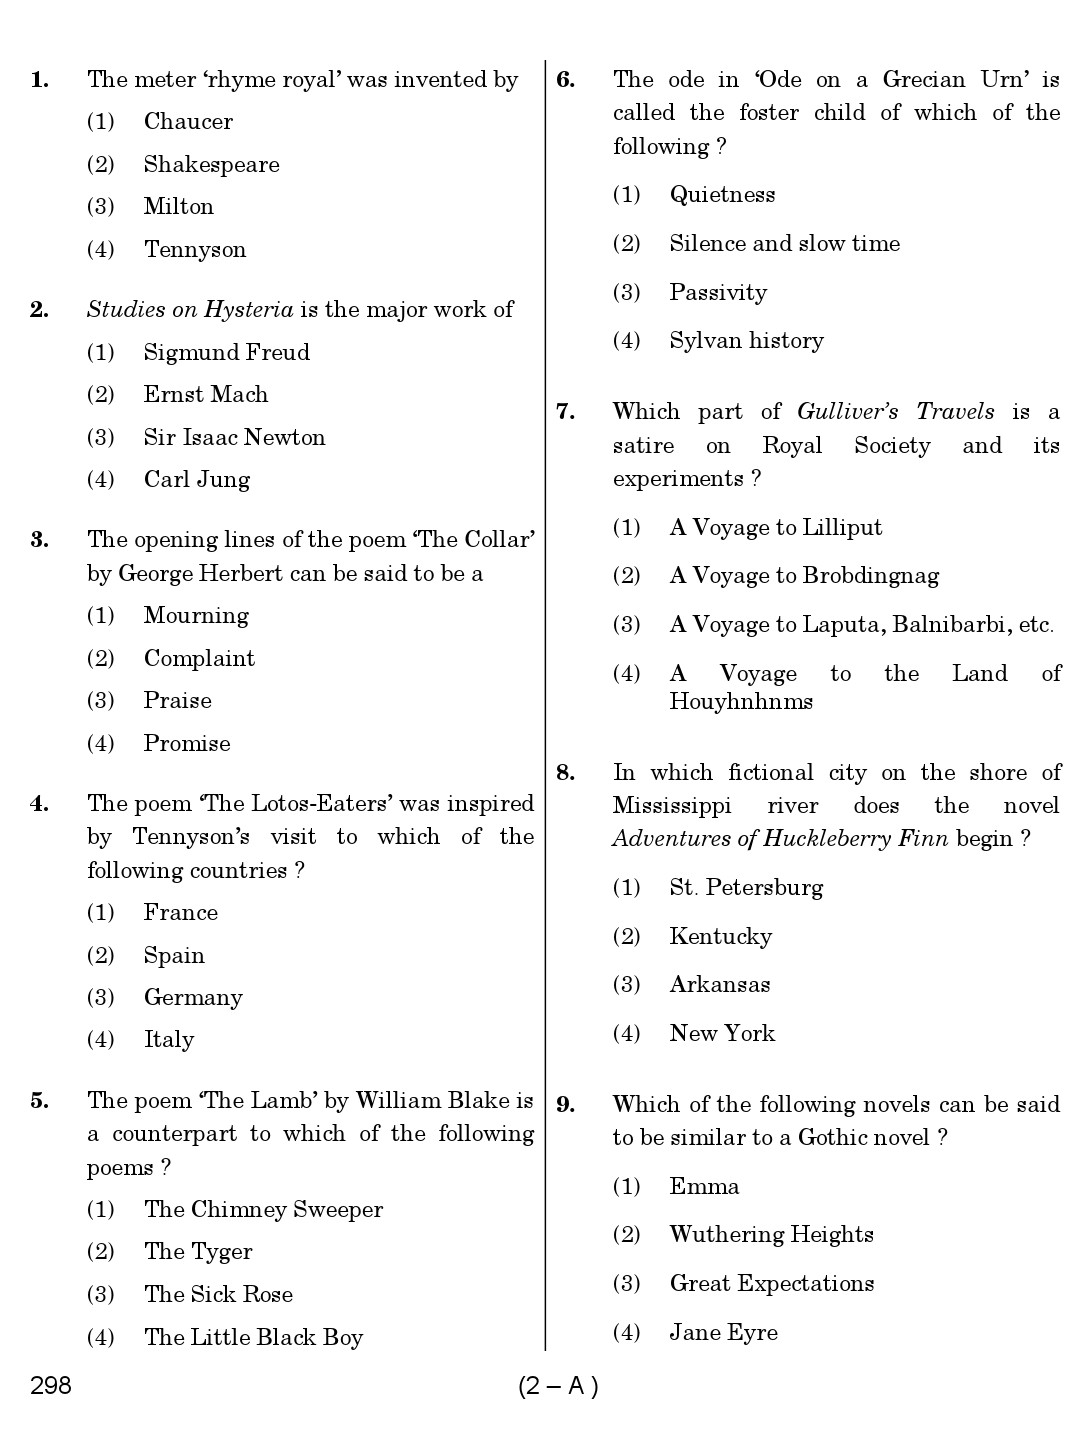 Karnataka PSC English Teachers Exam Sample Question Paper 2018 2